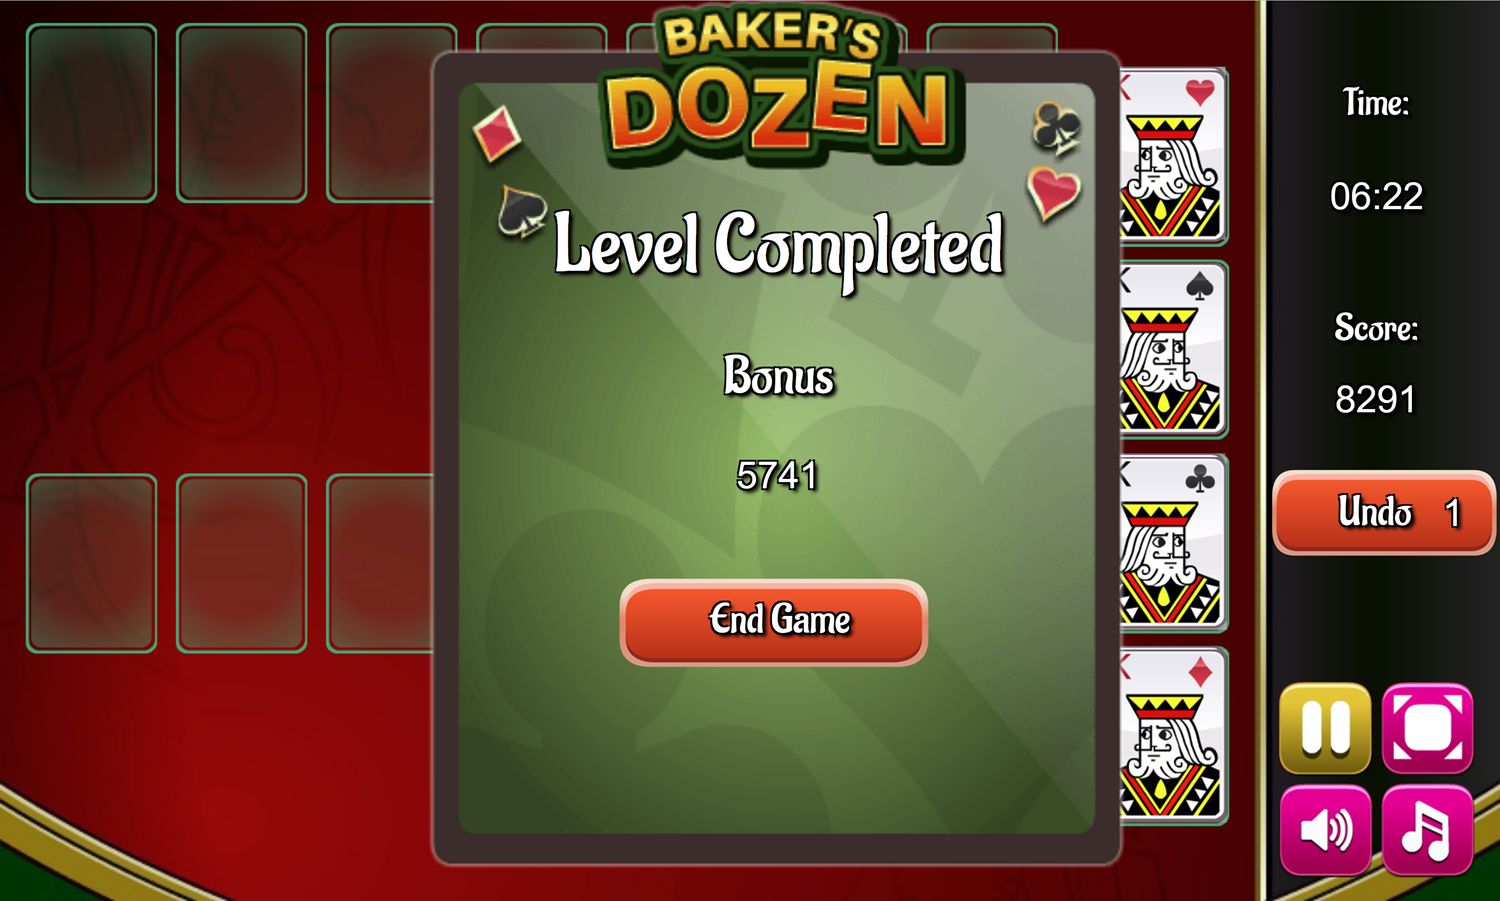 Baker's Dozen Game Level Completed Screen Screenshot.